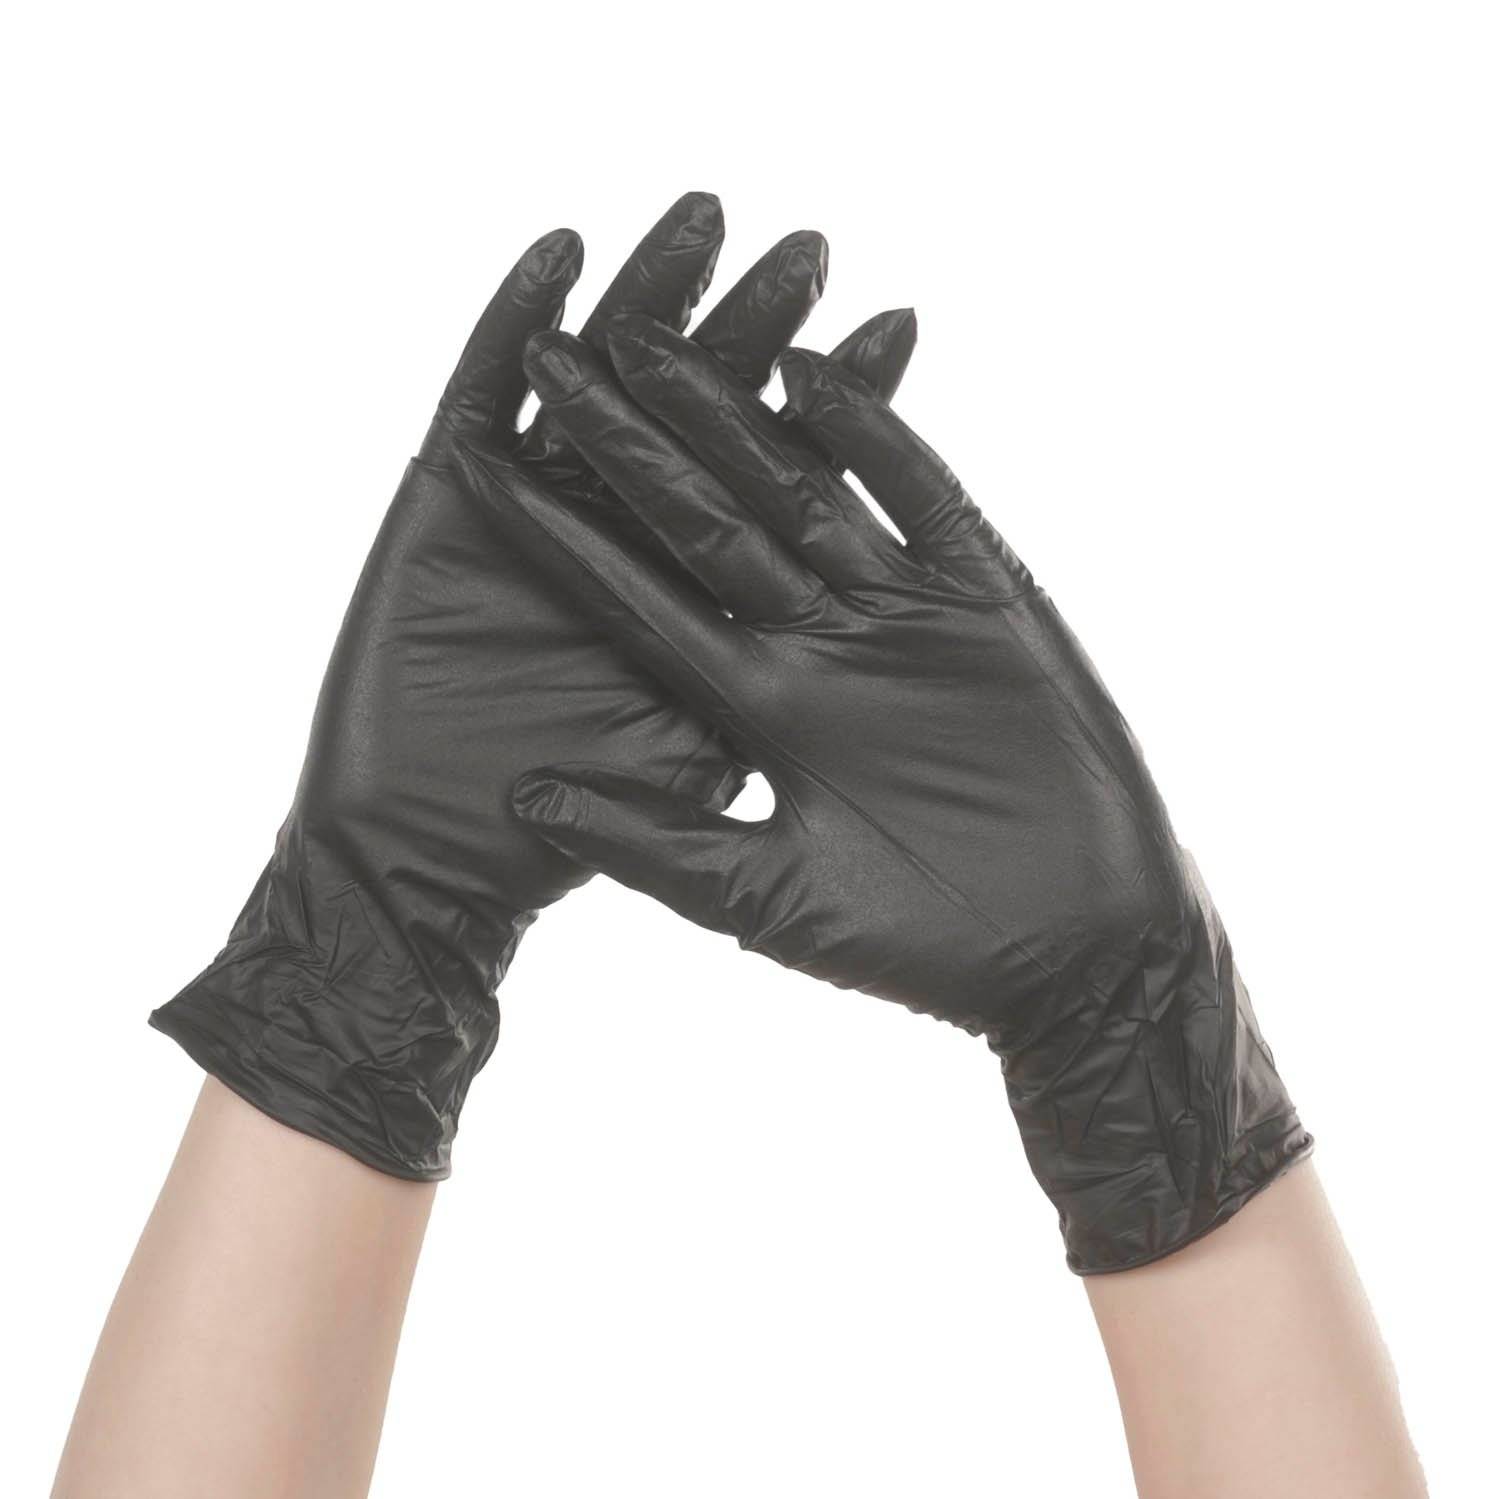 Galls 5 Mil Nitrile Exam Gloves (100/Box, 1,000/Case)